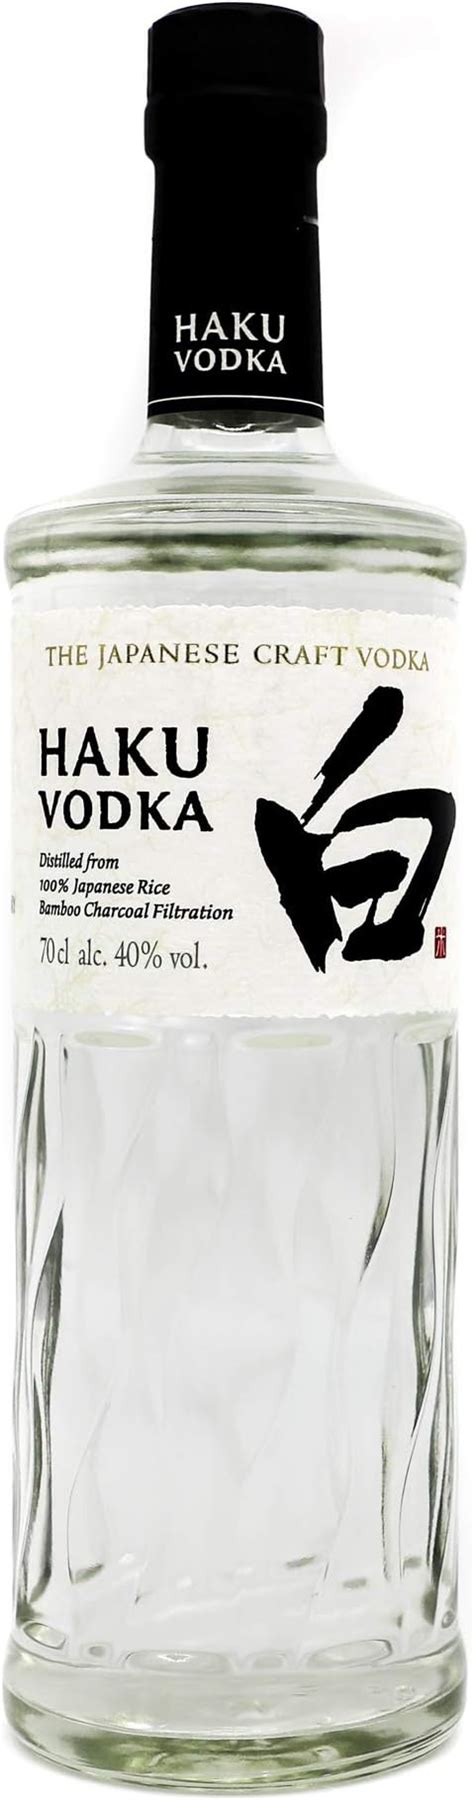 Haku Vodka Suntory Japanese Craft Vodka 700 Ml Amazonit Alimentari